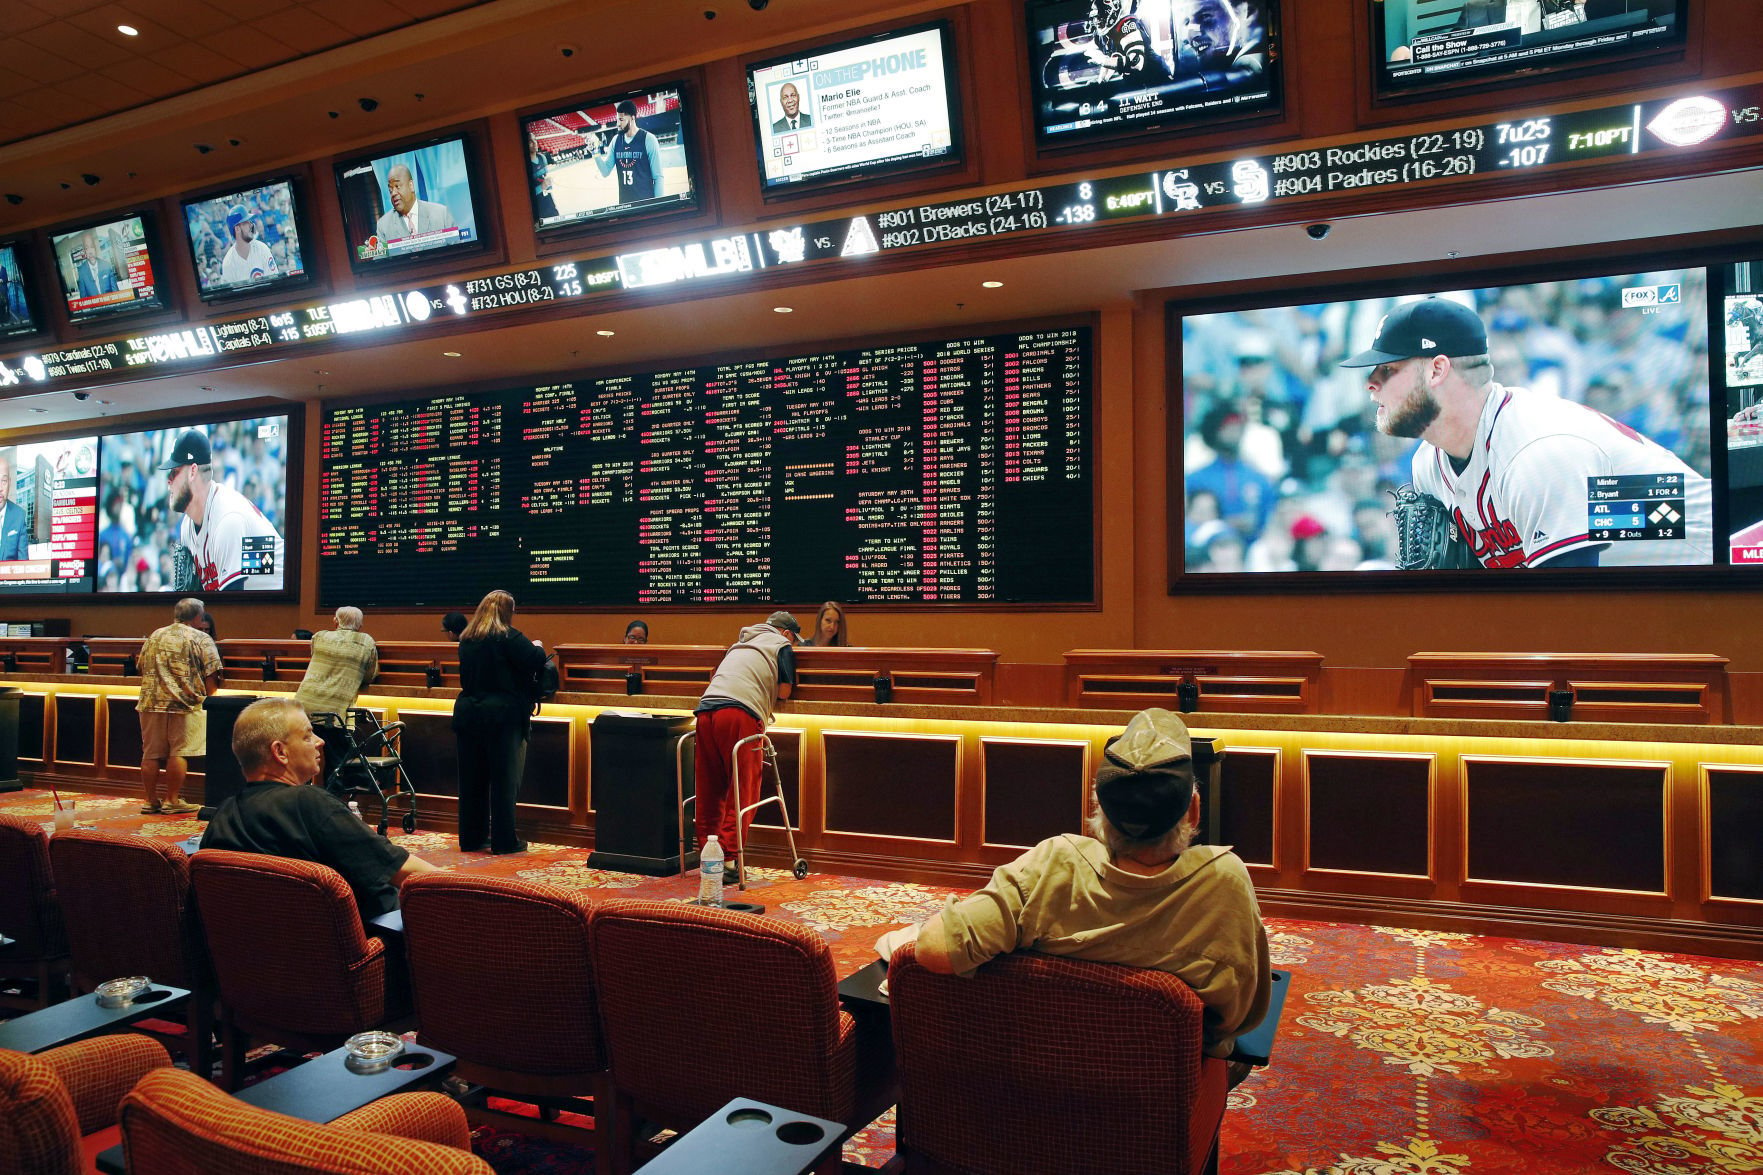 las vegas online sports book gambling sites